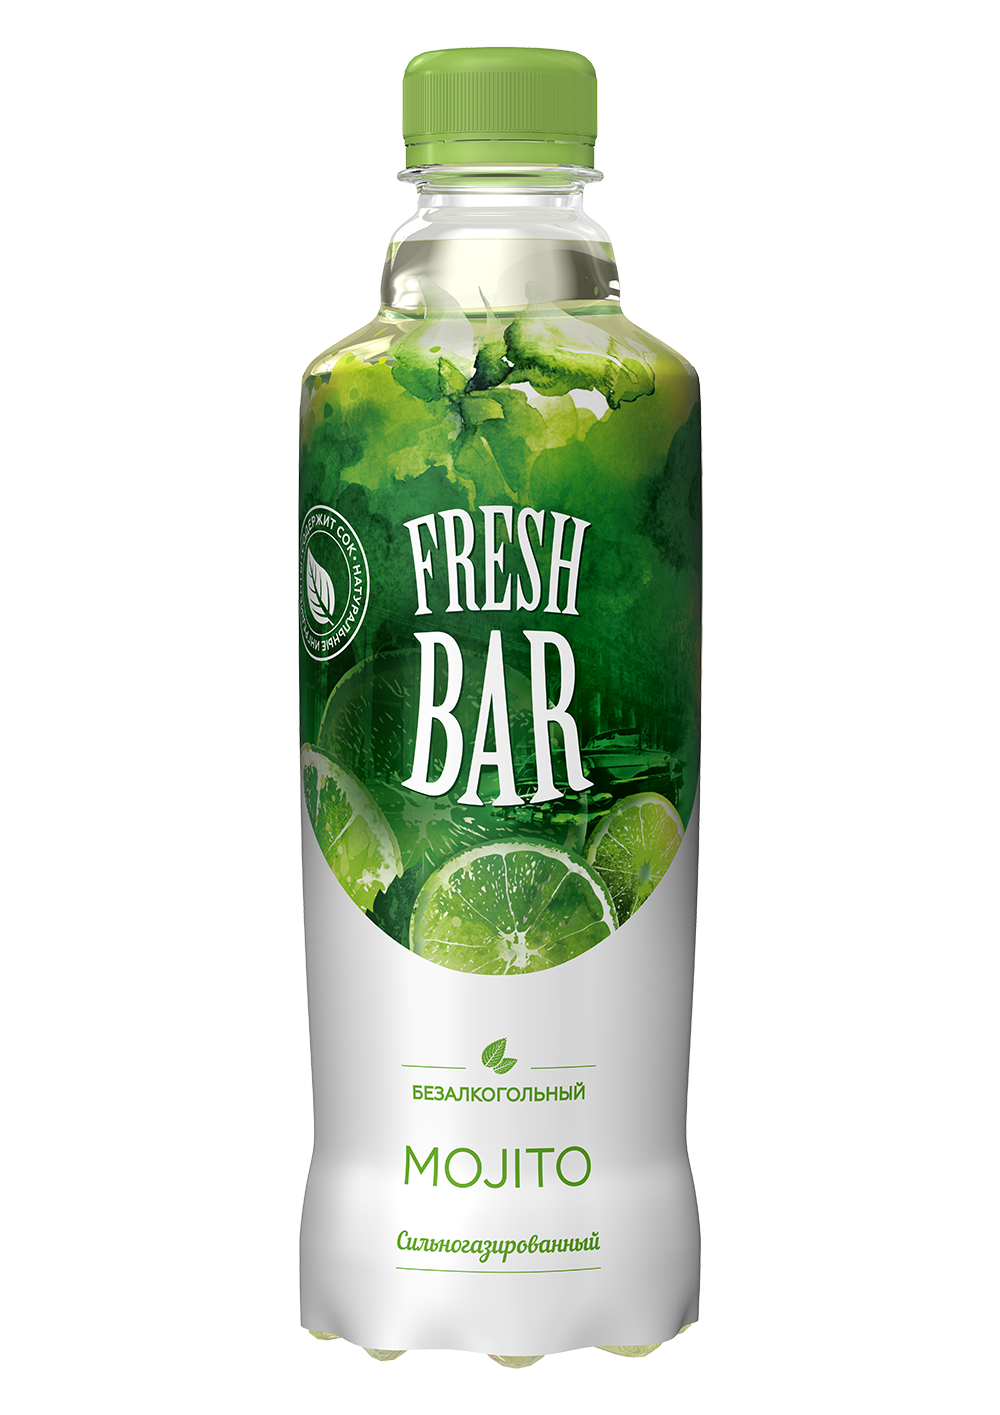 Fresh Bar напиток 1.5 л. Напиток Fresh Bar Mojito. Фреш бар Мохито 0.48. Фреш бар напиток Мохито. Мохито адреса